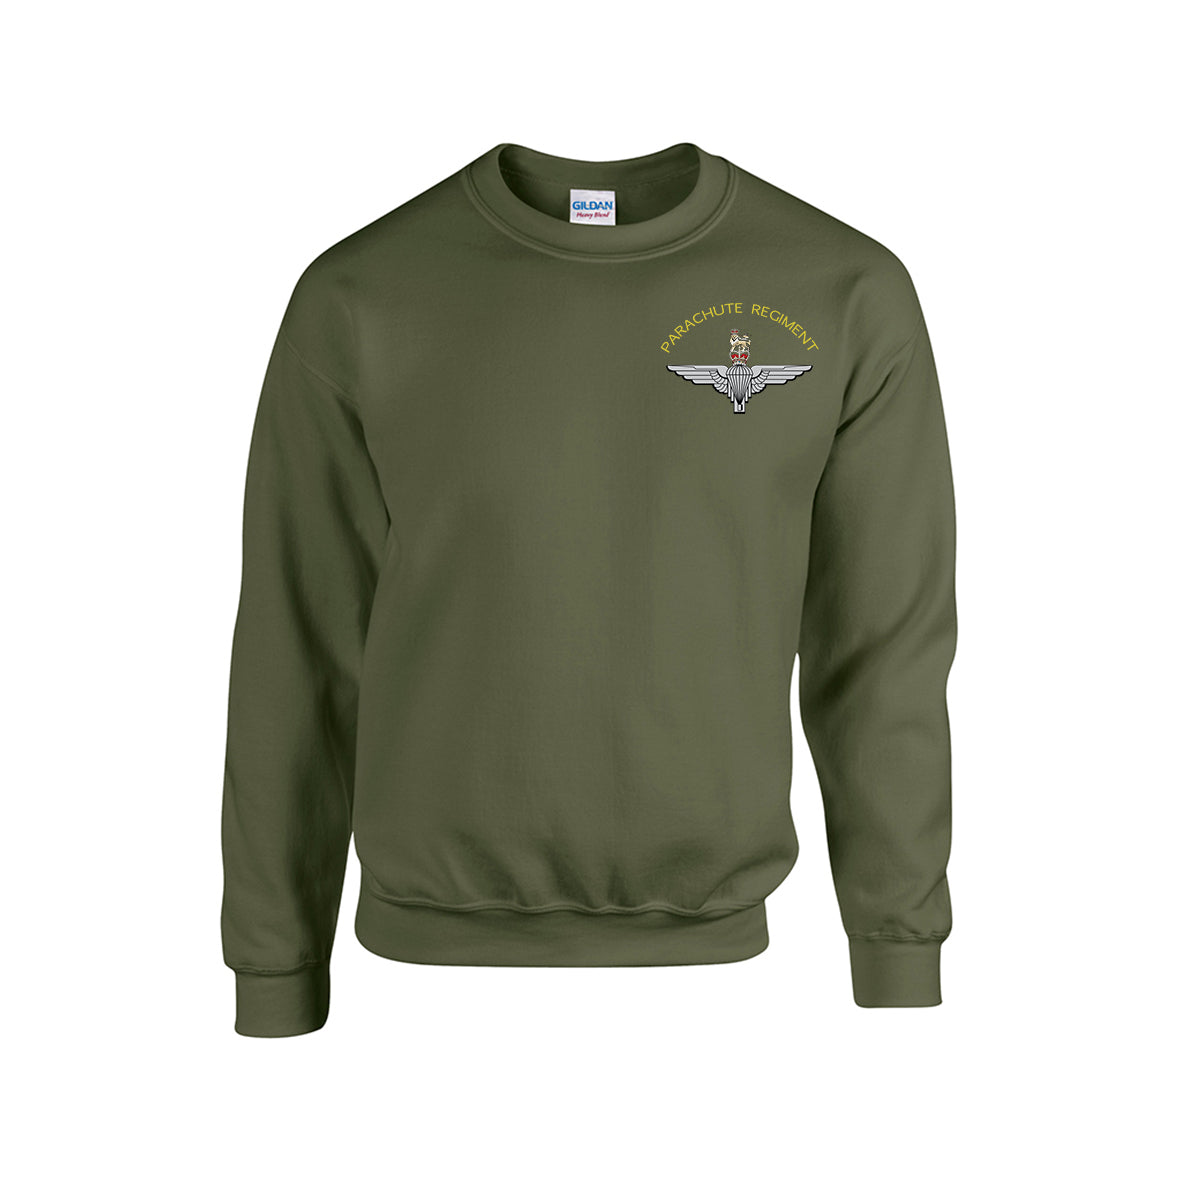 GD56 - Premium Parachute Regiment drop shoulder sweatshirt - Bespoke Emerald Embroidery Ltd